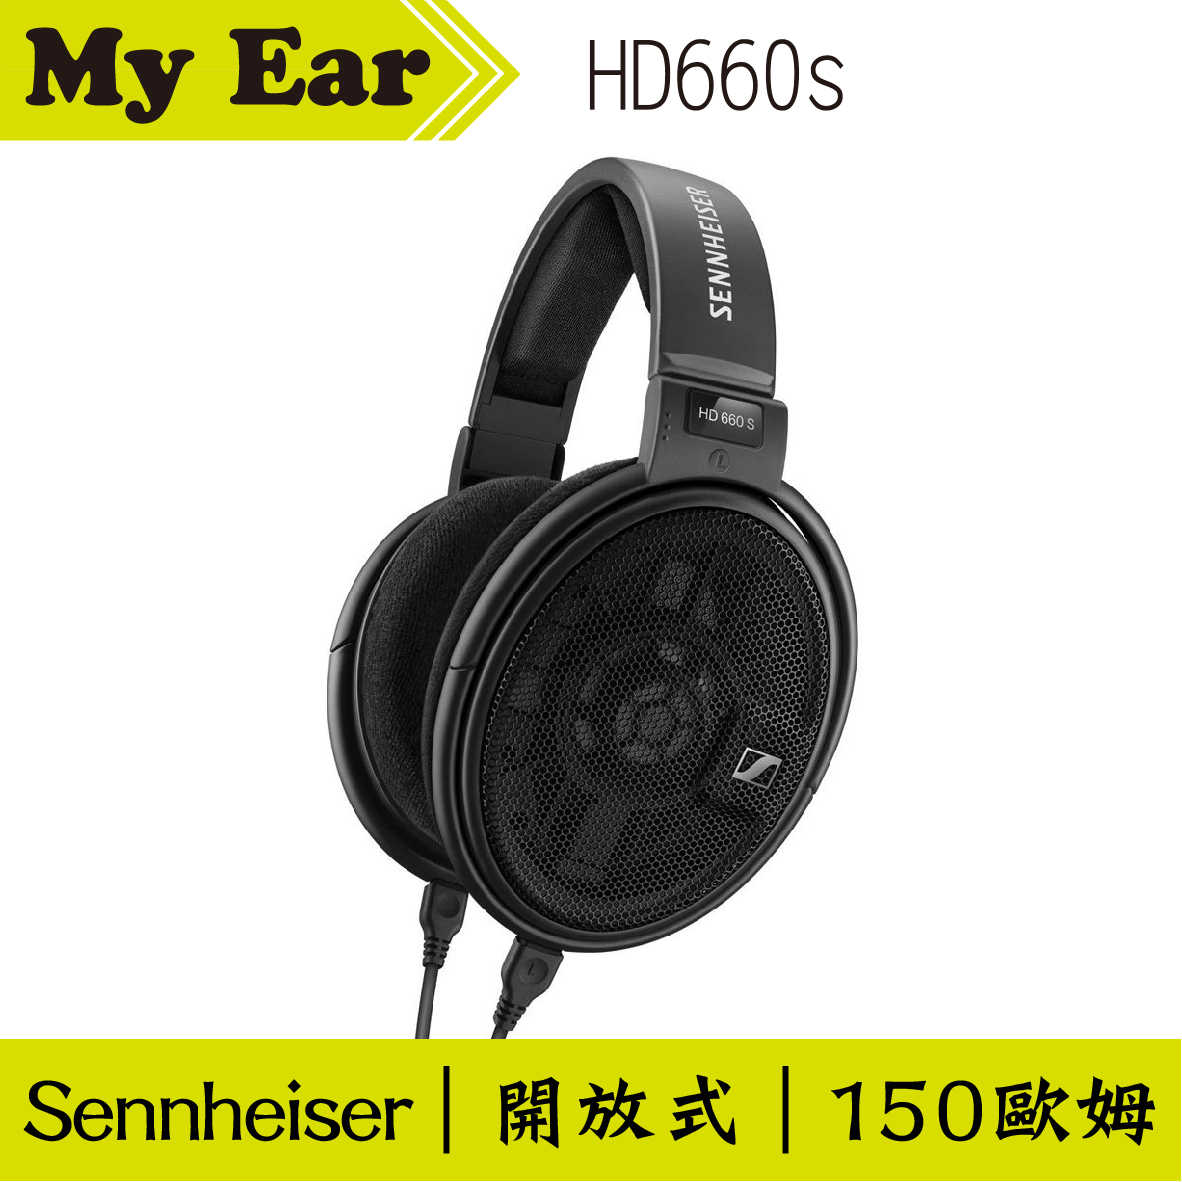 Sennheiser 森海塞爾 HD660s 開放式 耳罩式 耳機 | My Ear 專門店